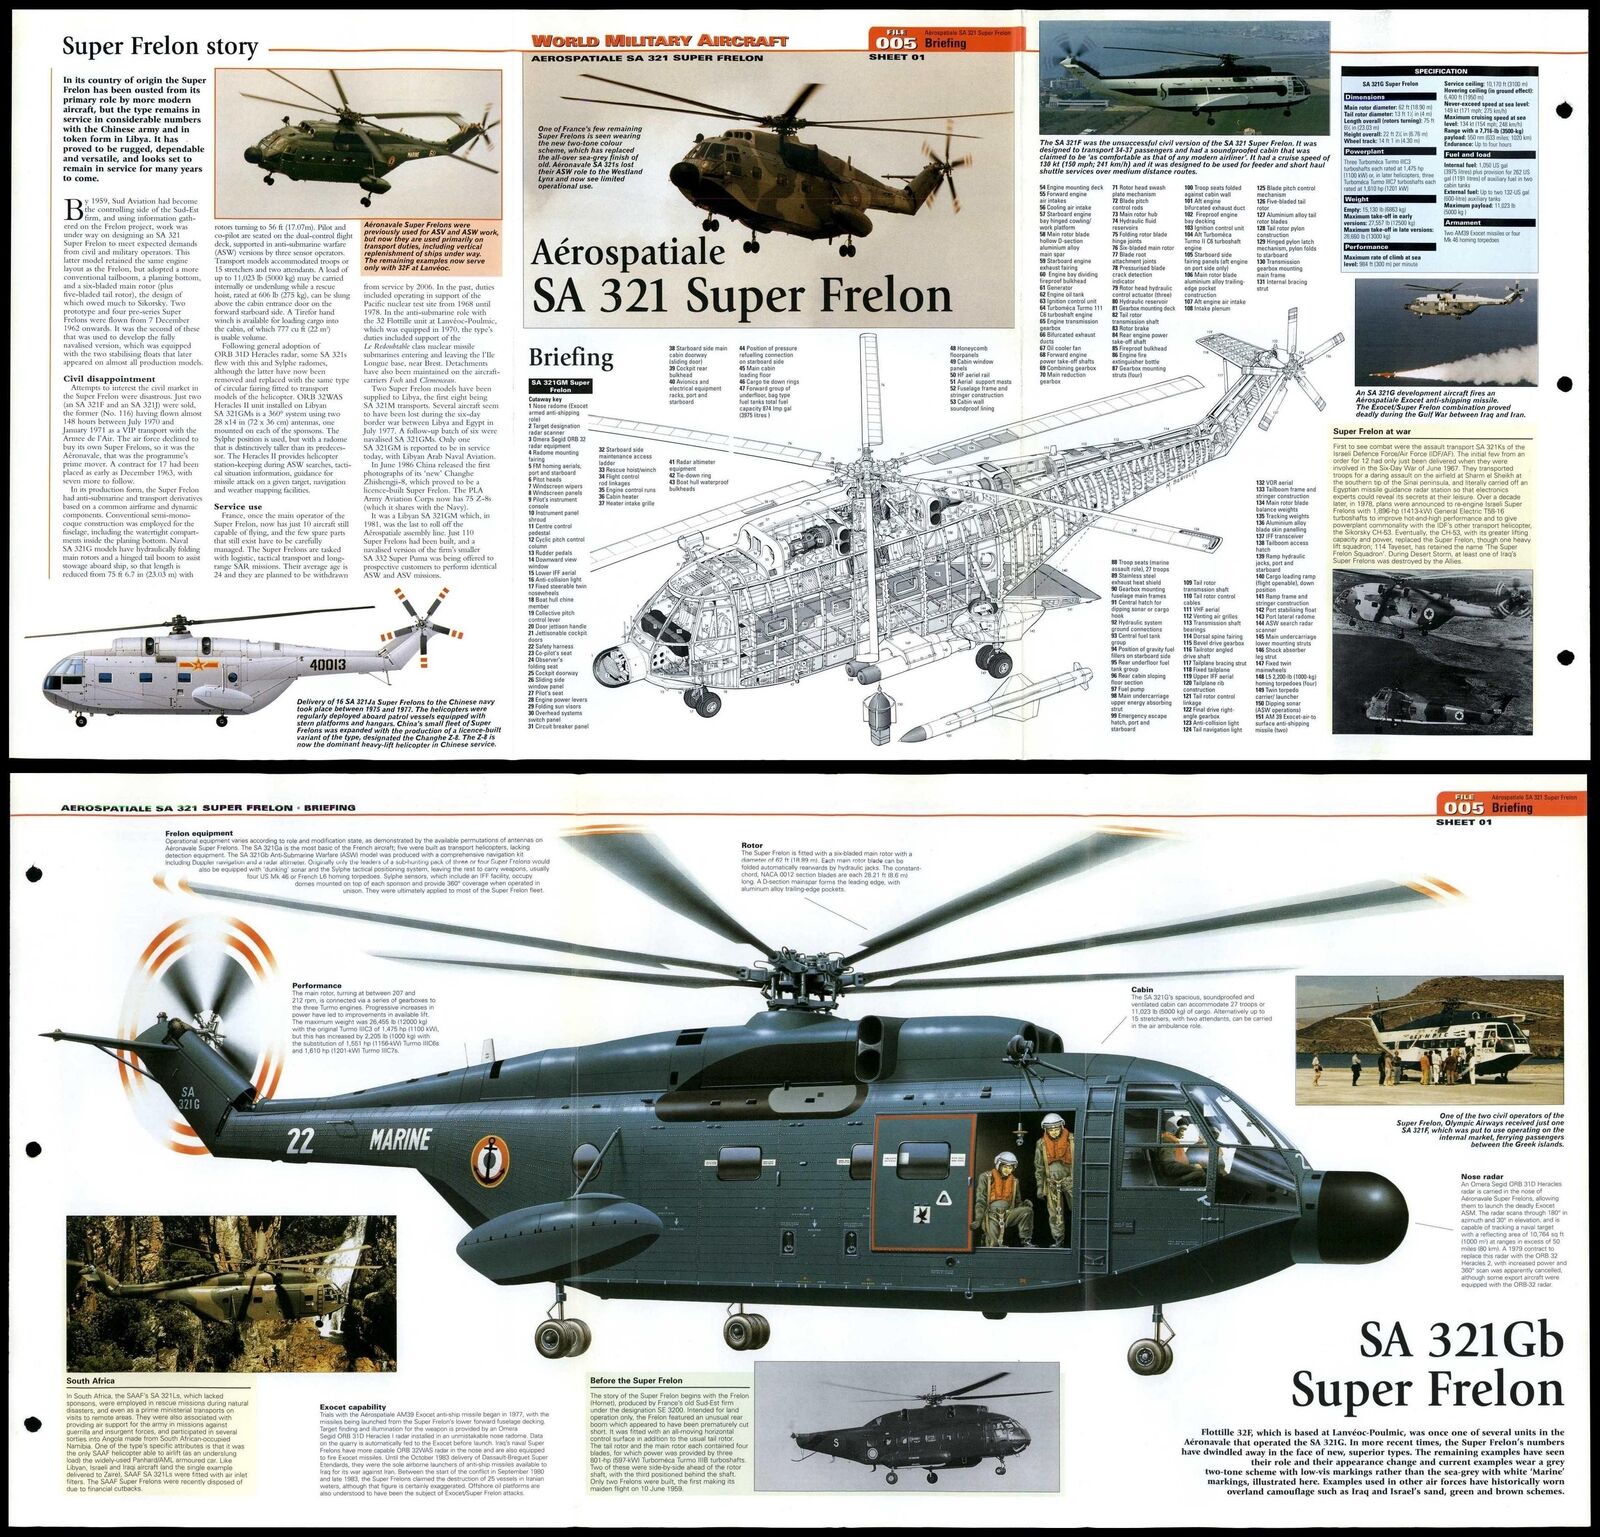 Aerospatiale SA 321 Super Frelon #5 Military World Aircraft Information Fold Out